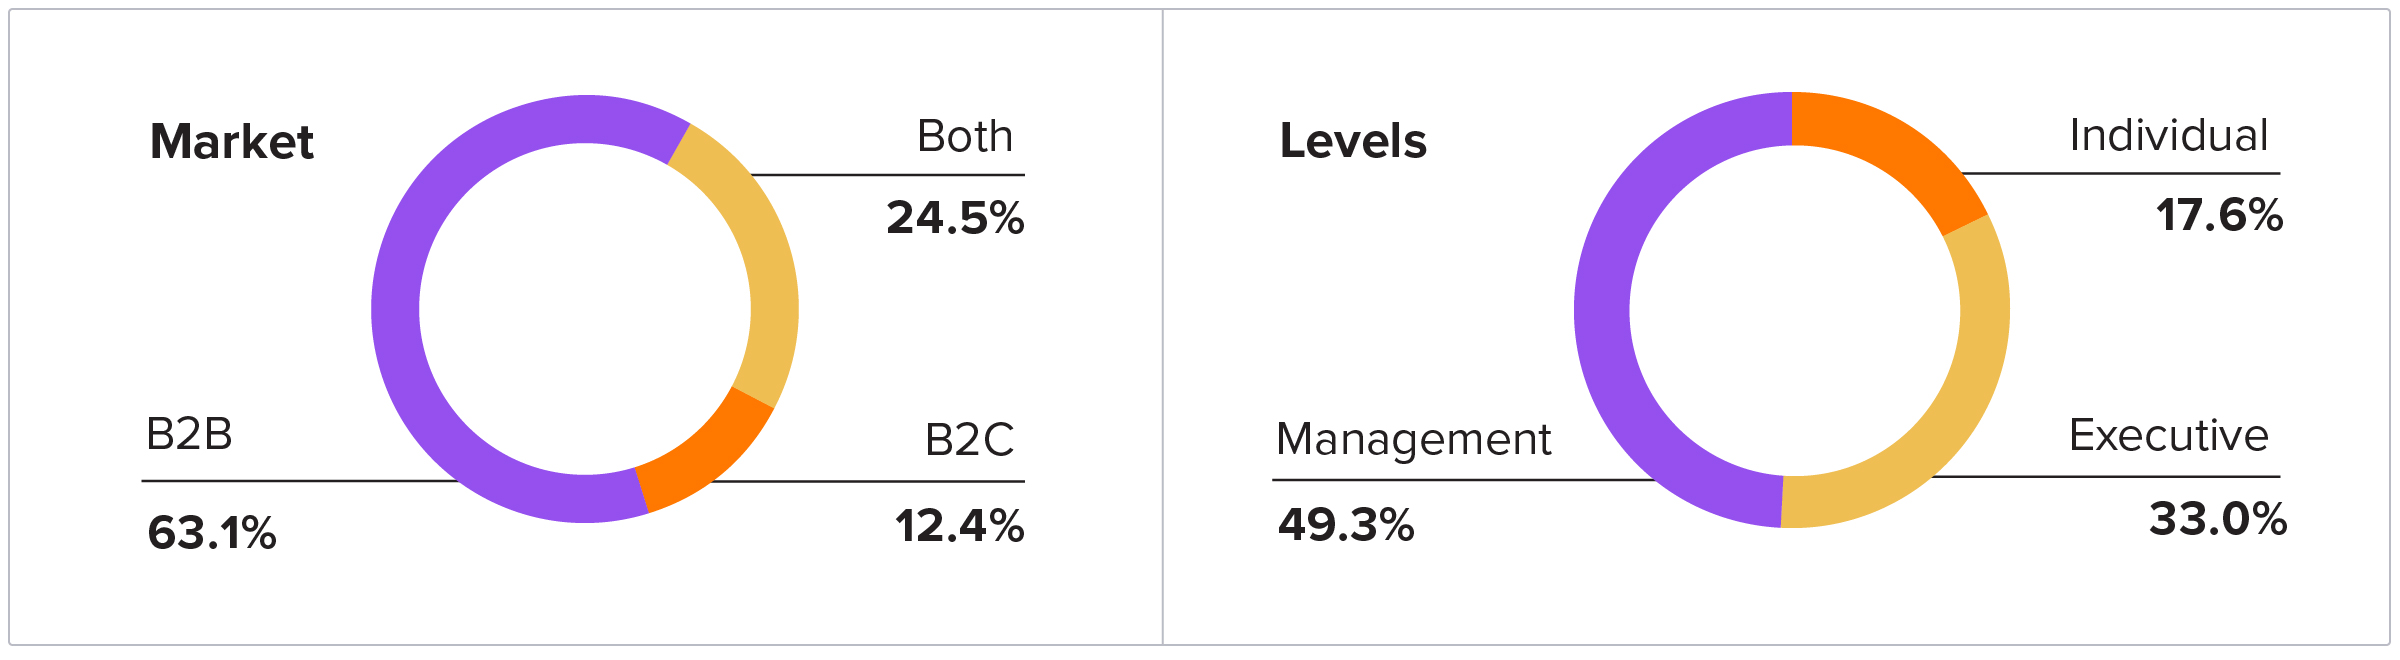 Market - B2B 63.1%, Both 24.5%, B2C 12.4% | Levels - Management 49.3%, Individual 17.6%, Executive 33%